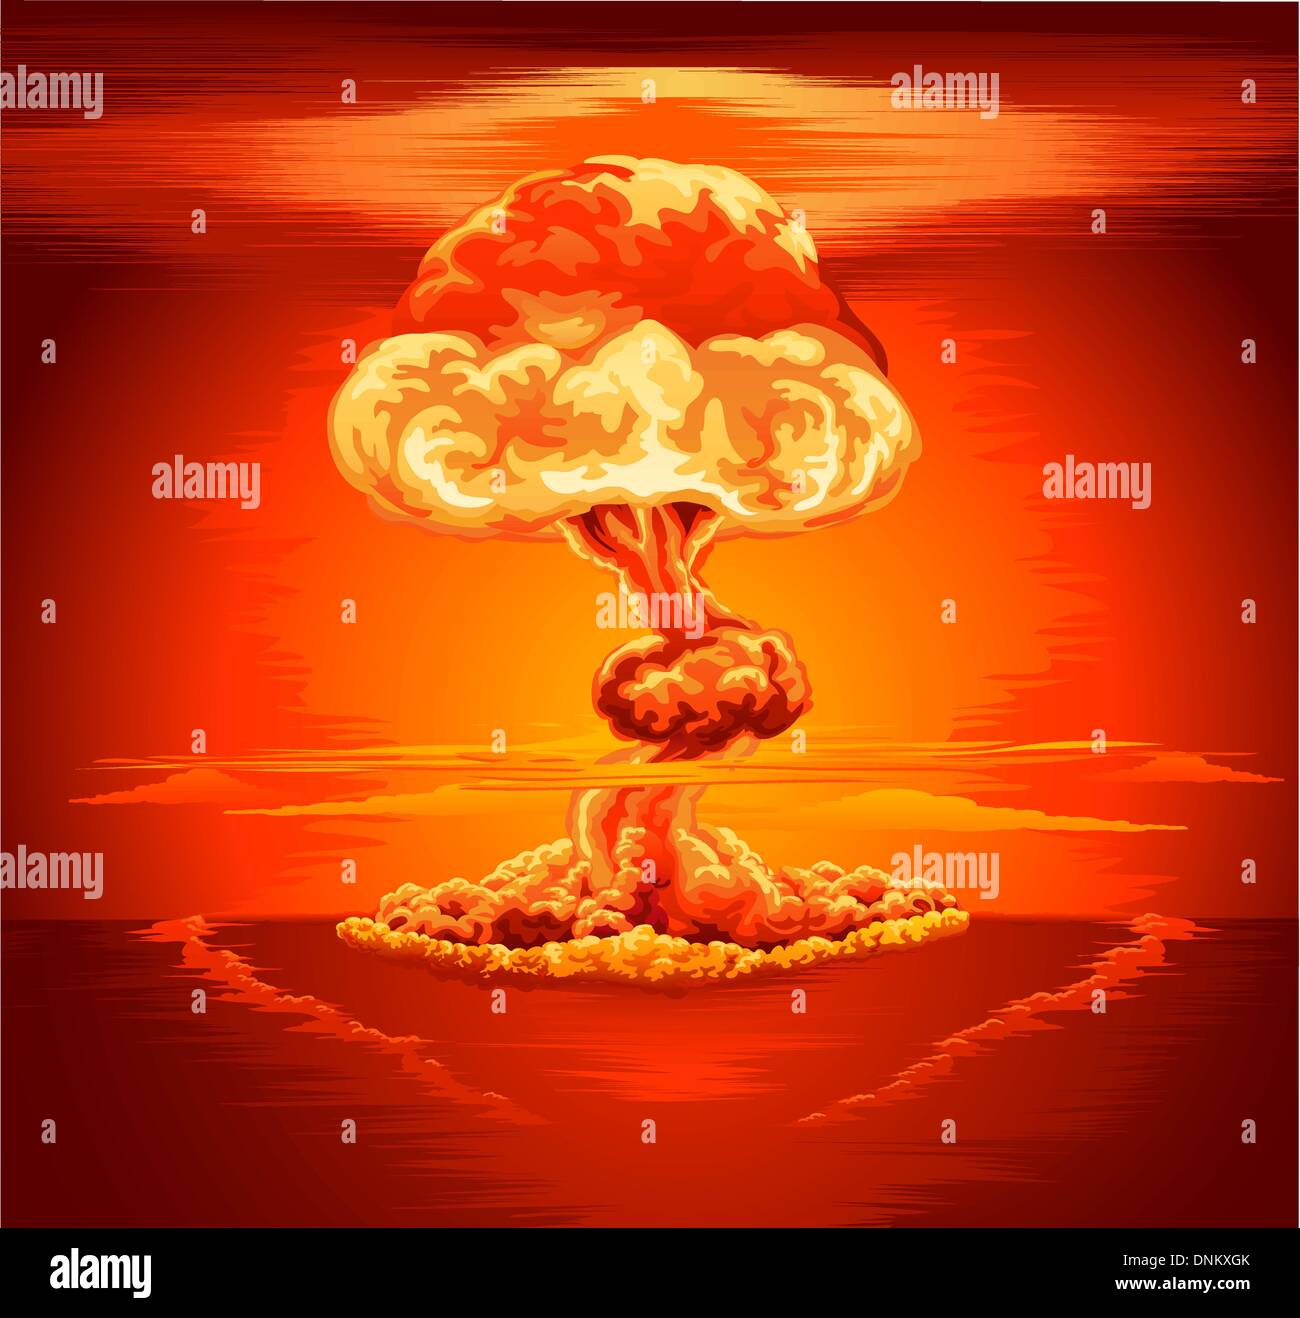 Illustration of a mushroom cloud following a nuclear explosion Stock Vector